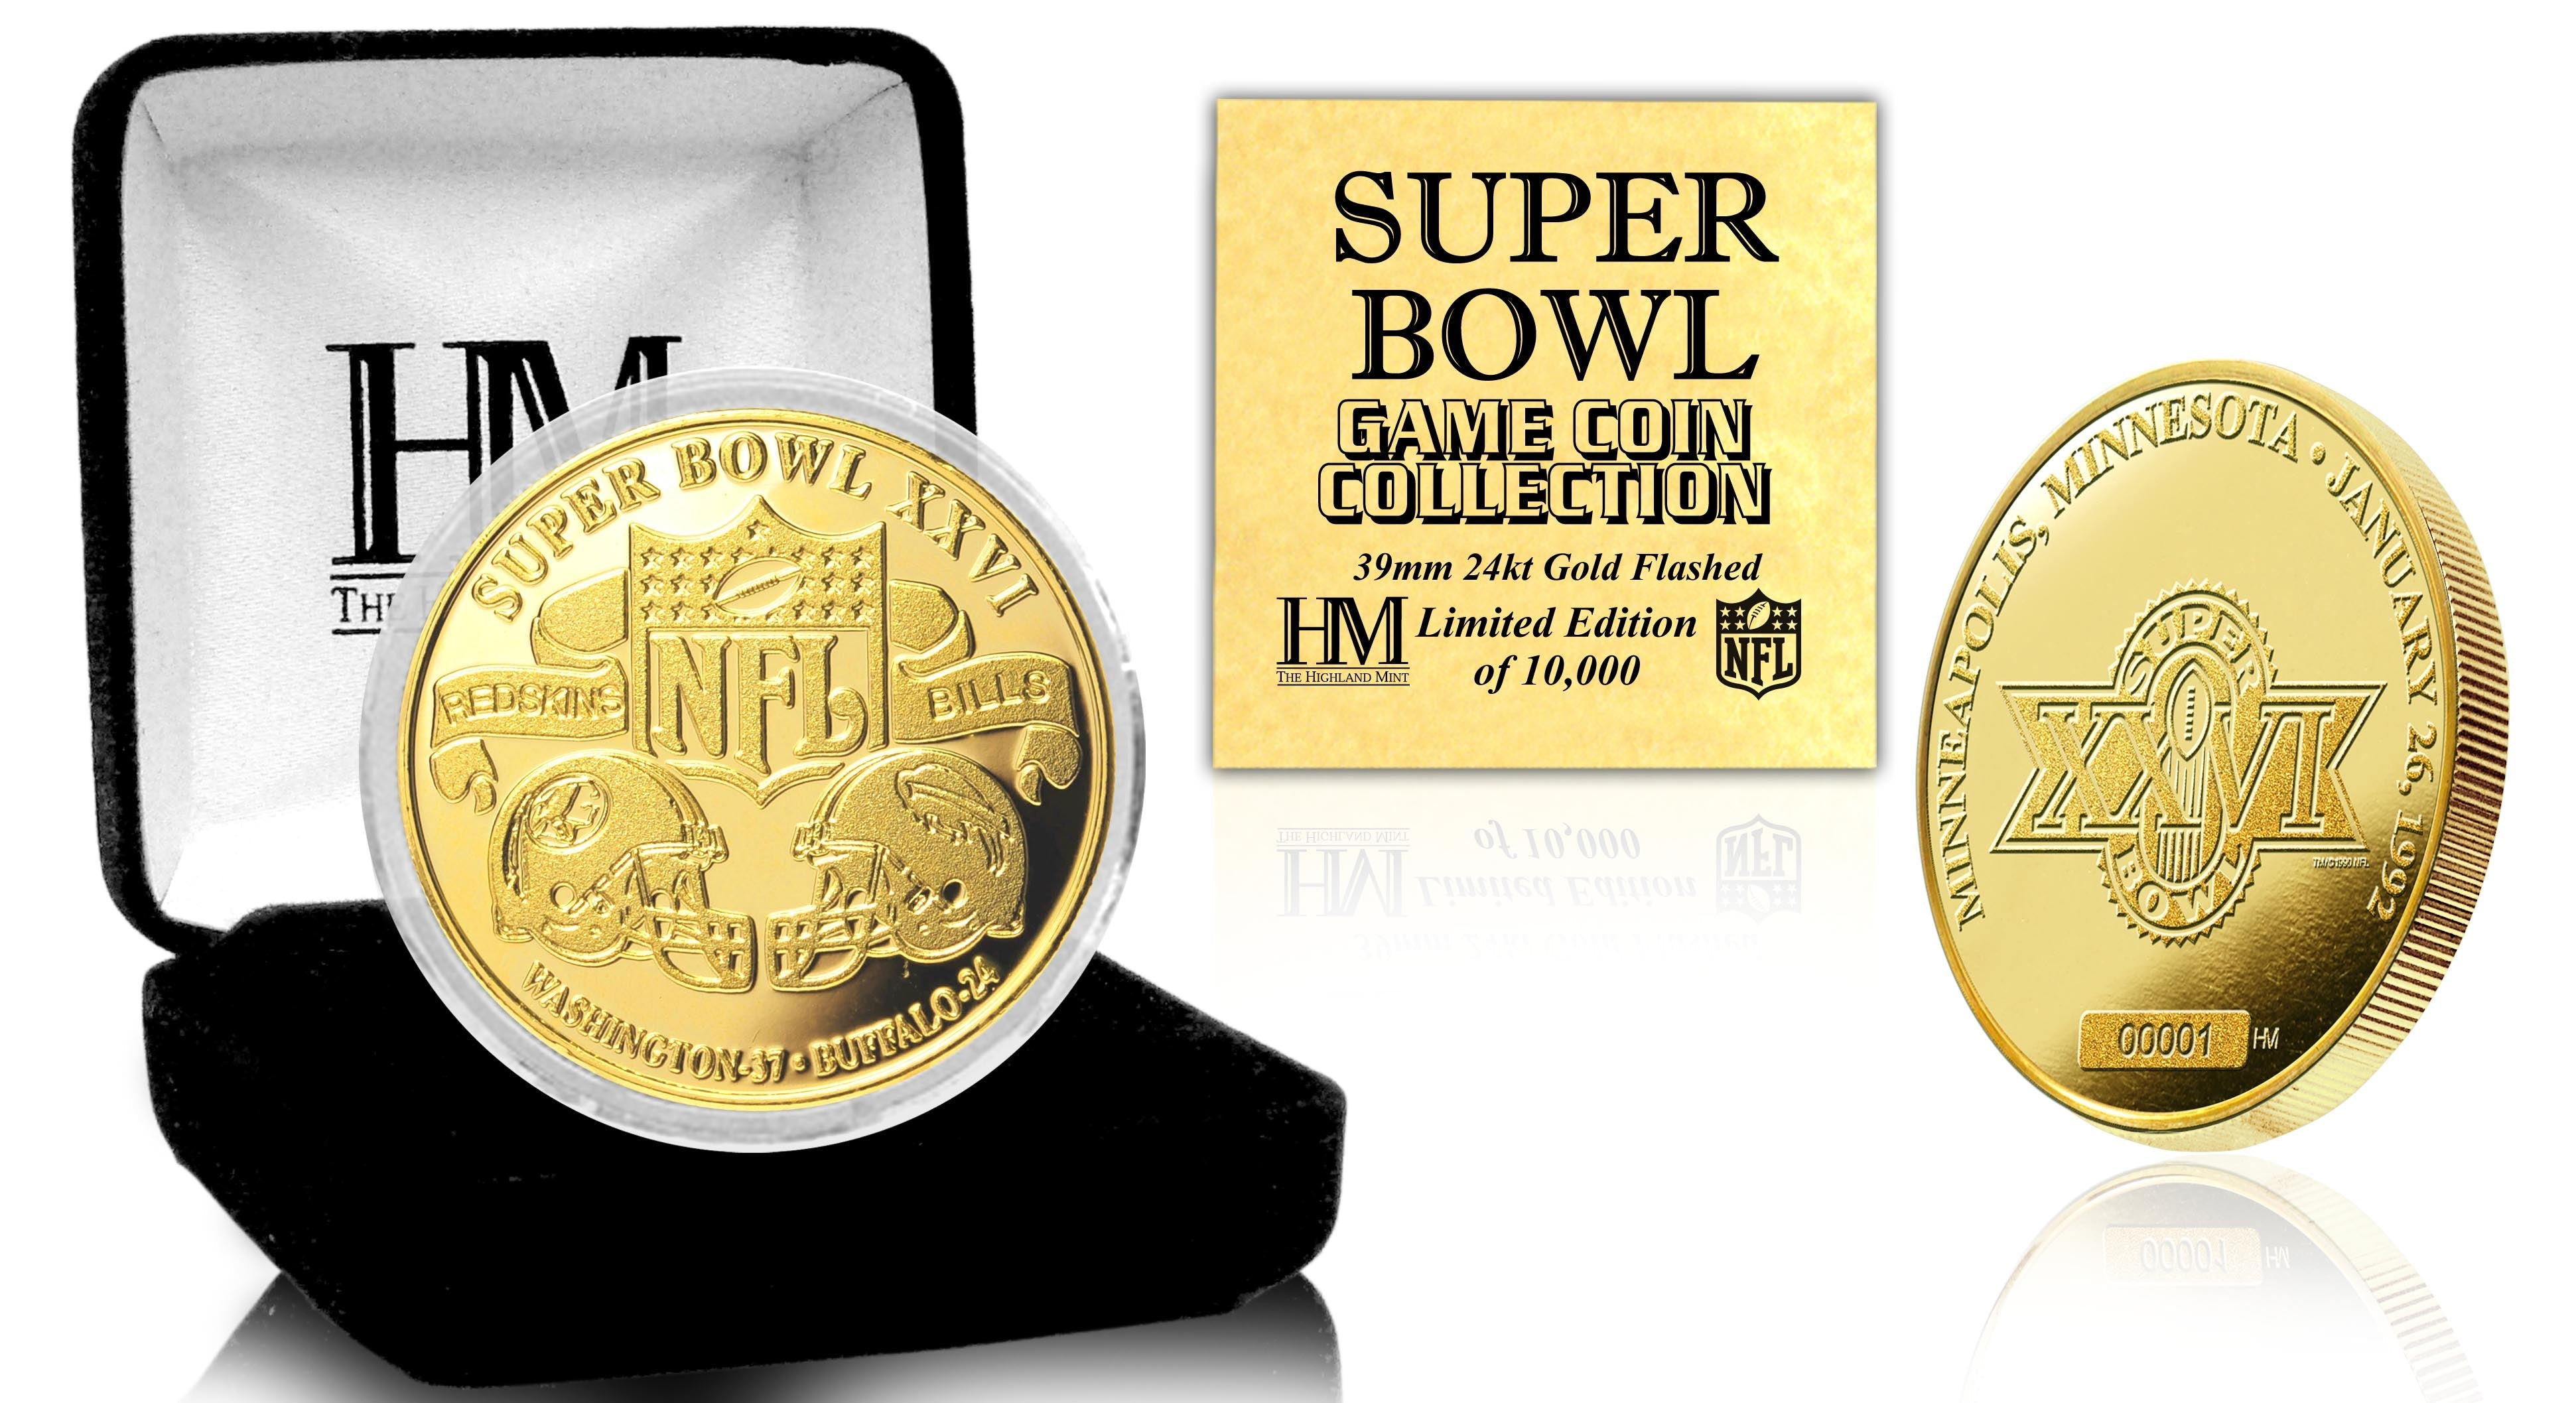 Super Bowl XXVI 24kt Gold Flip Coin